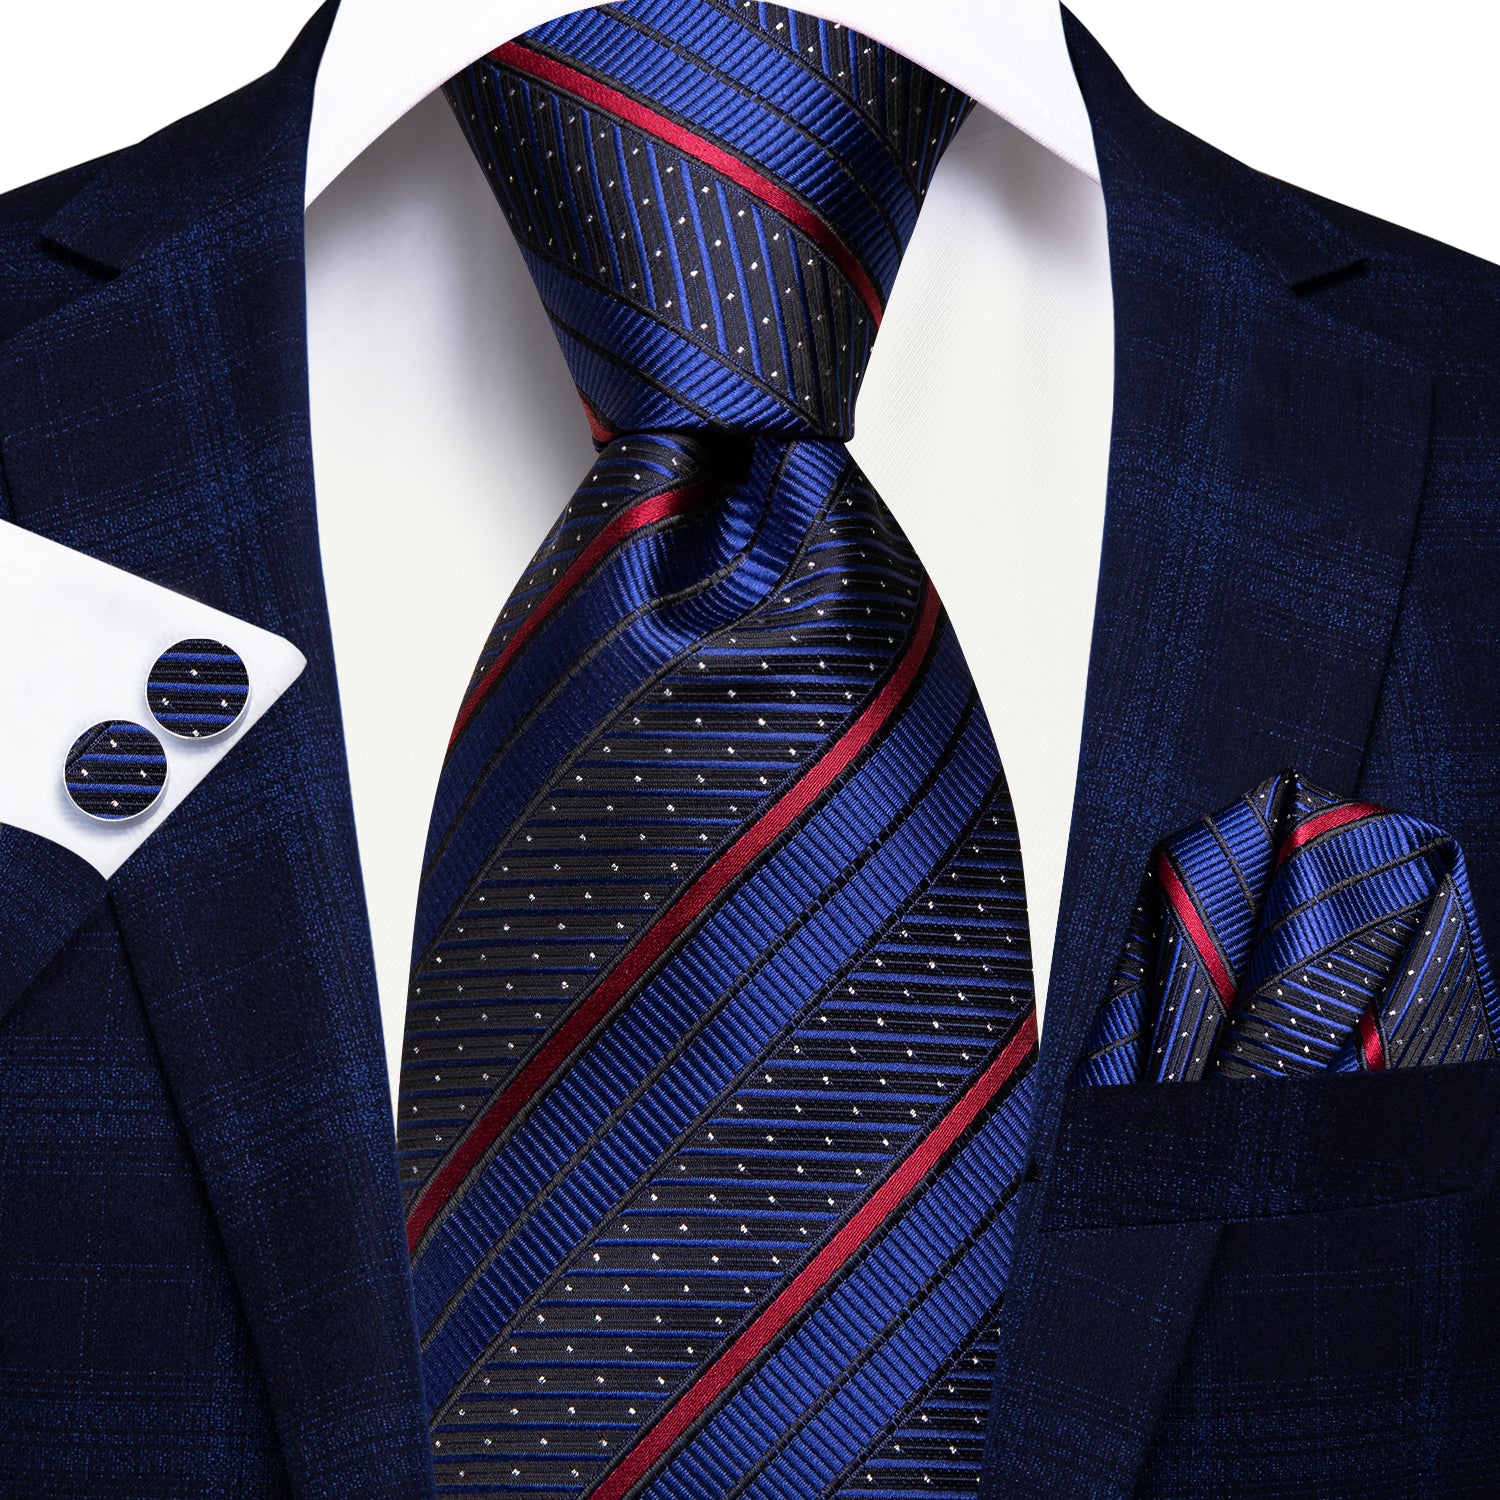 Deep Blue Red Line Striped Tie Pocket Square Cufflinks Set – ties2you